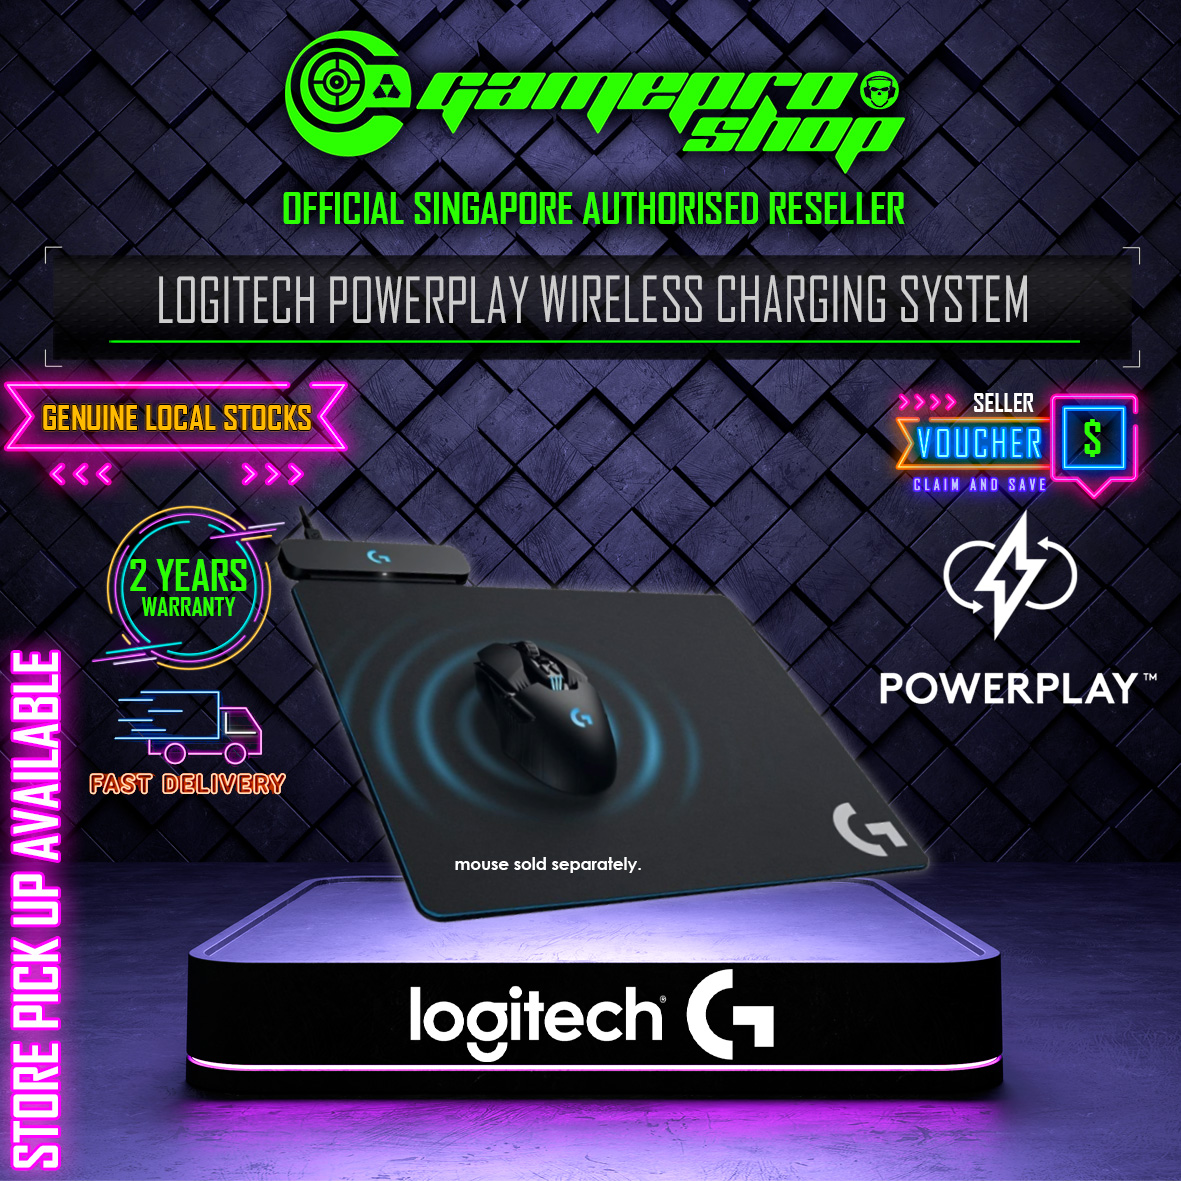 https://gameprosg.com/wp-content/uploads/2018/01/Logitech-POWERPLAY-Wireless-Charging-System-1.jpg